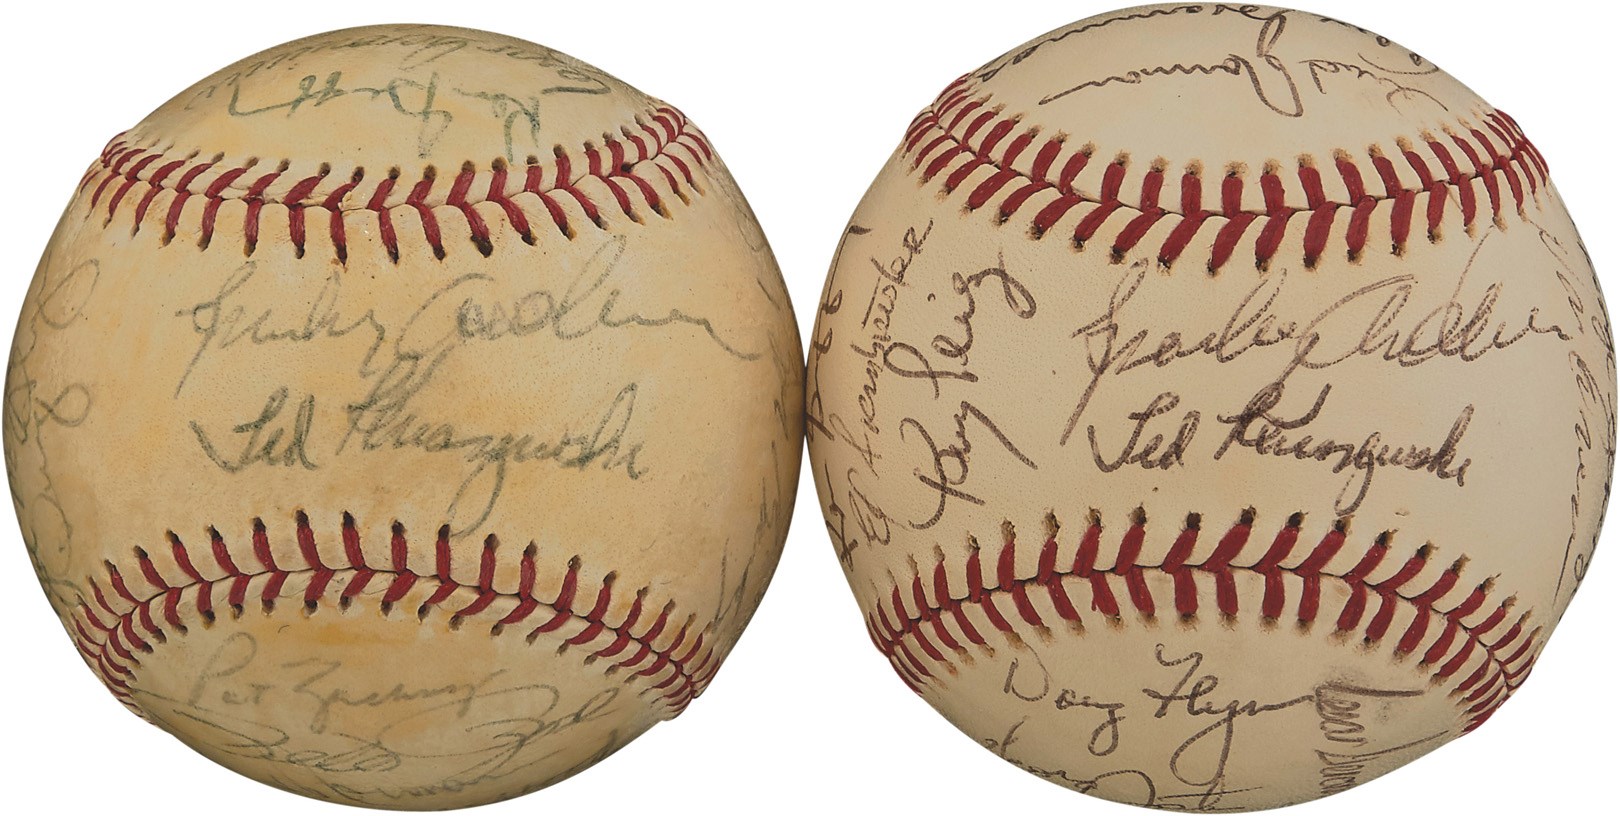 - 1975 & 1976 World Champion Cincinnati Reds Team-Signed Baseballs - Obtained by '75 WS Champ (PSA)